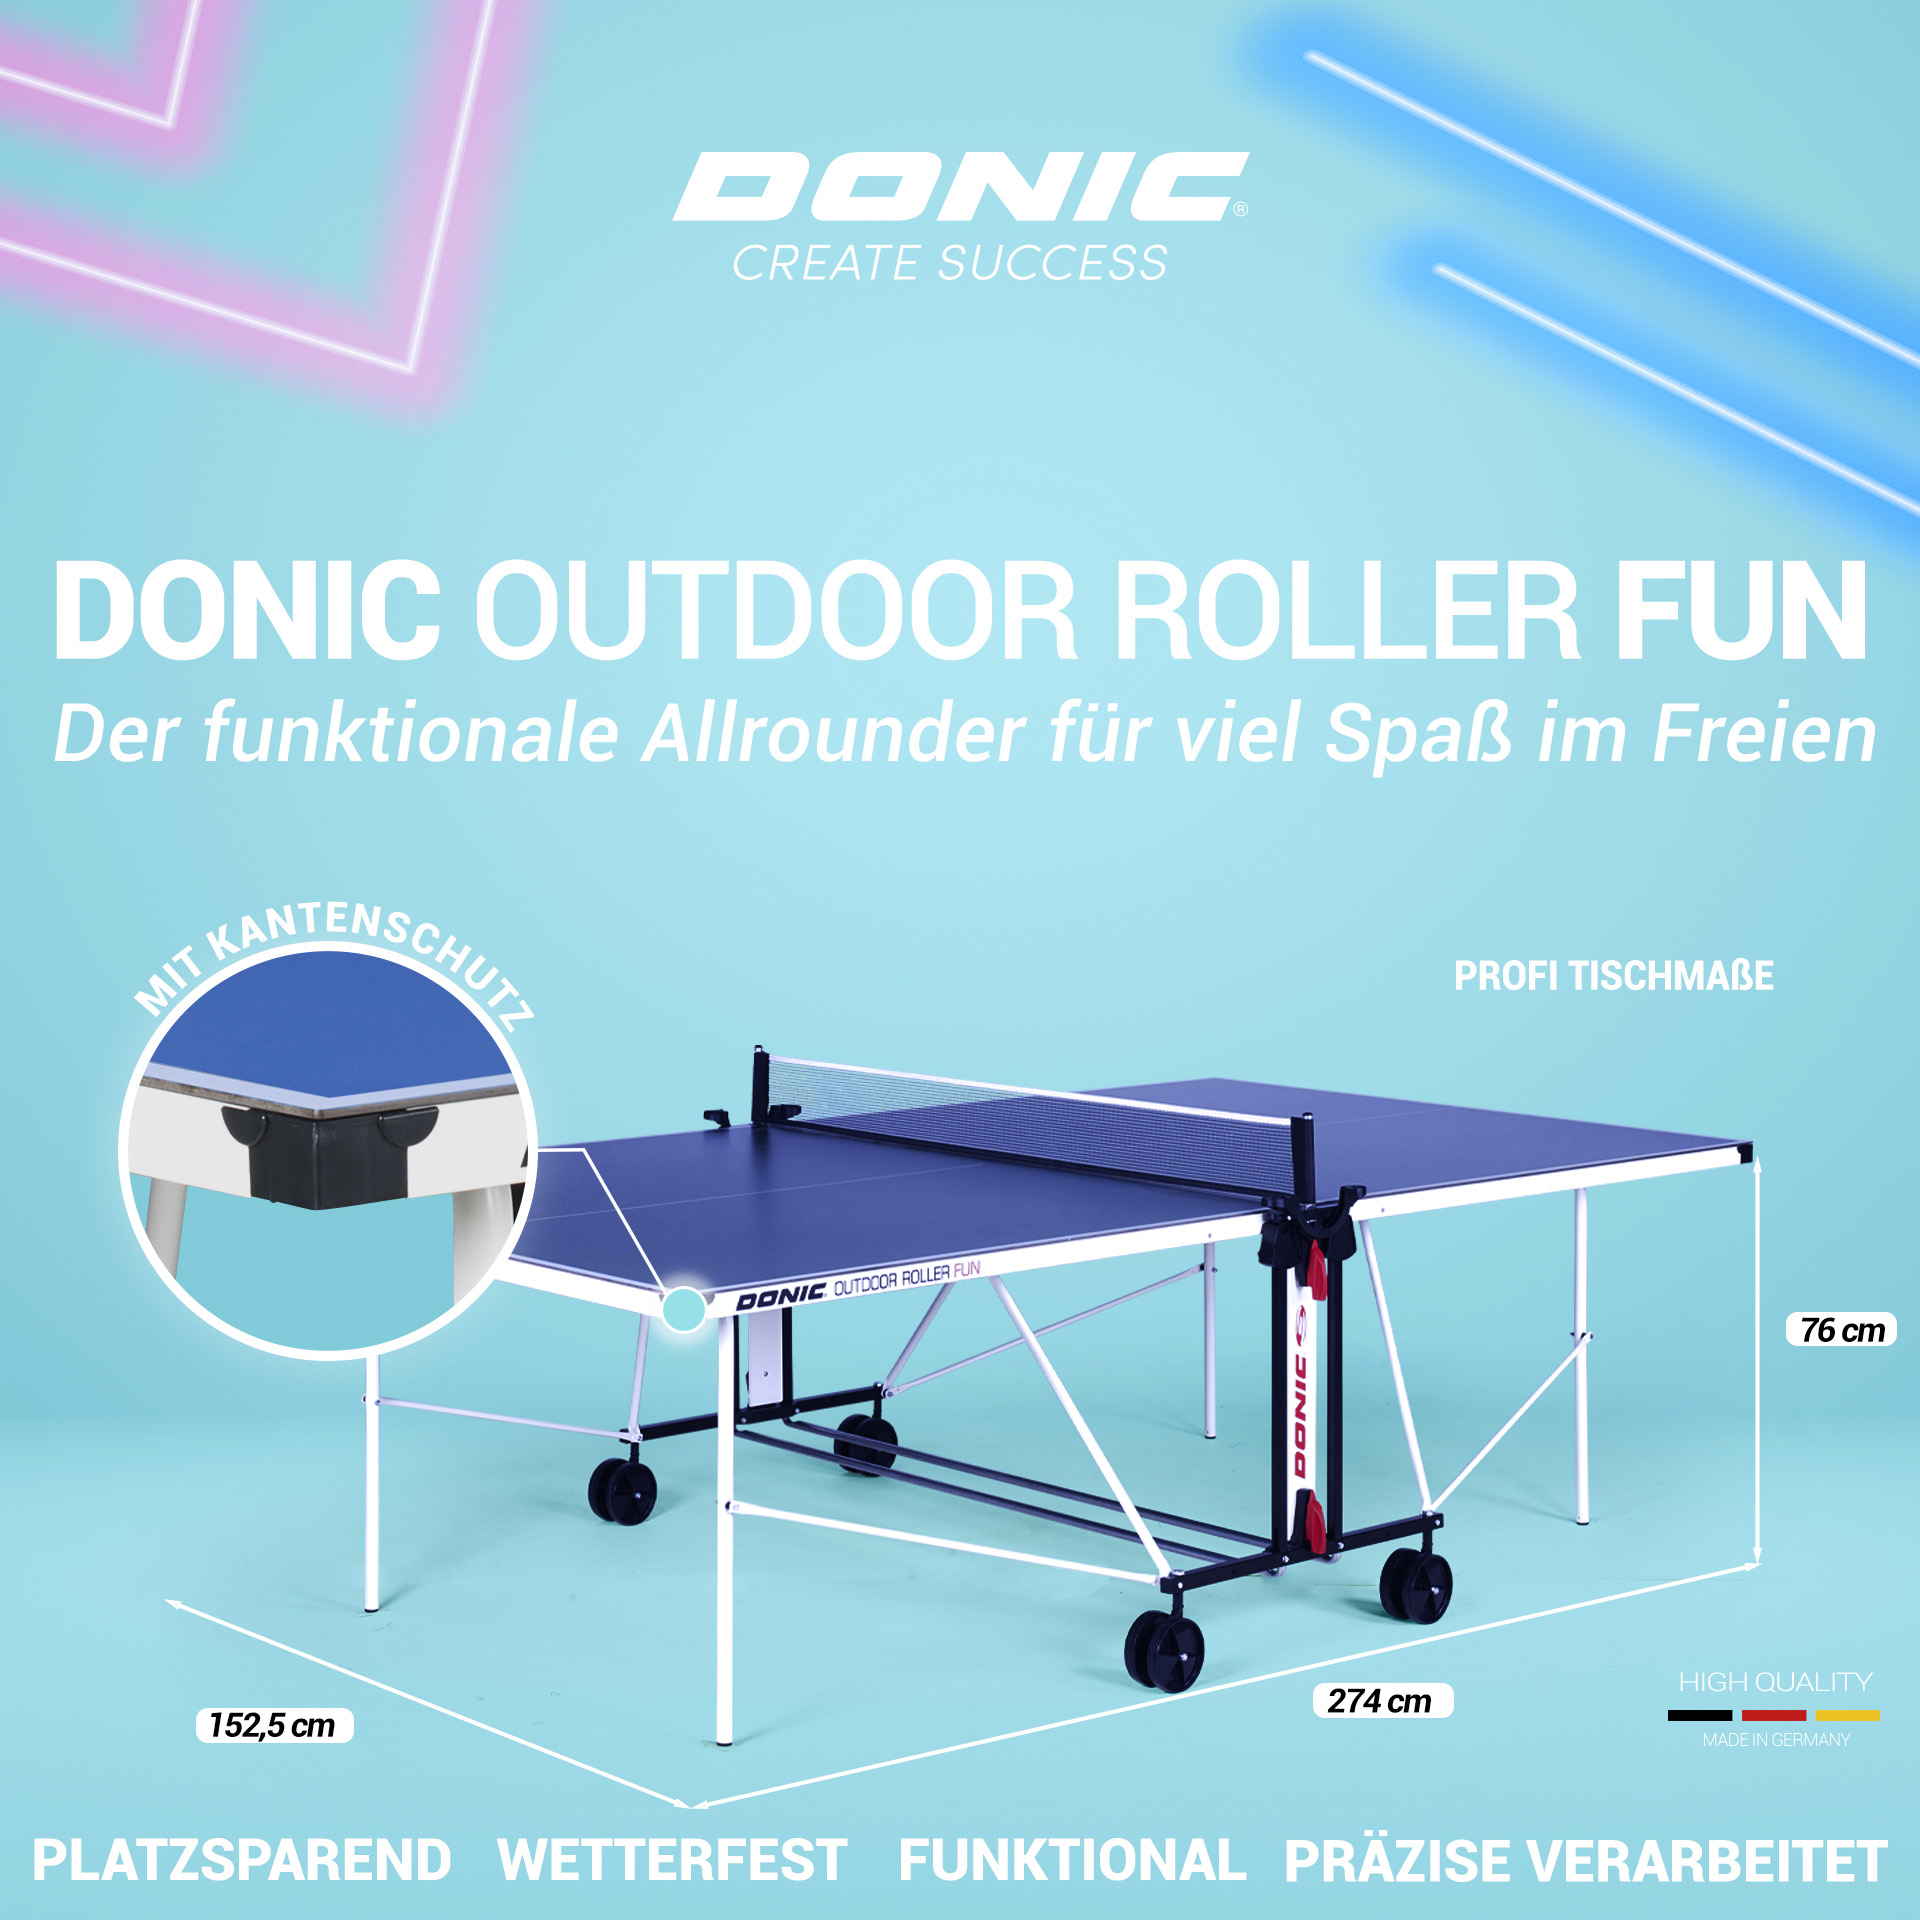 Donic Outdoor Roller Fun | CREATE SUCCESS